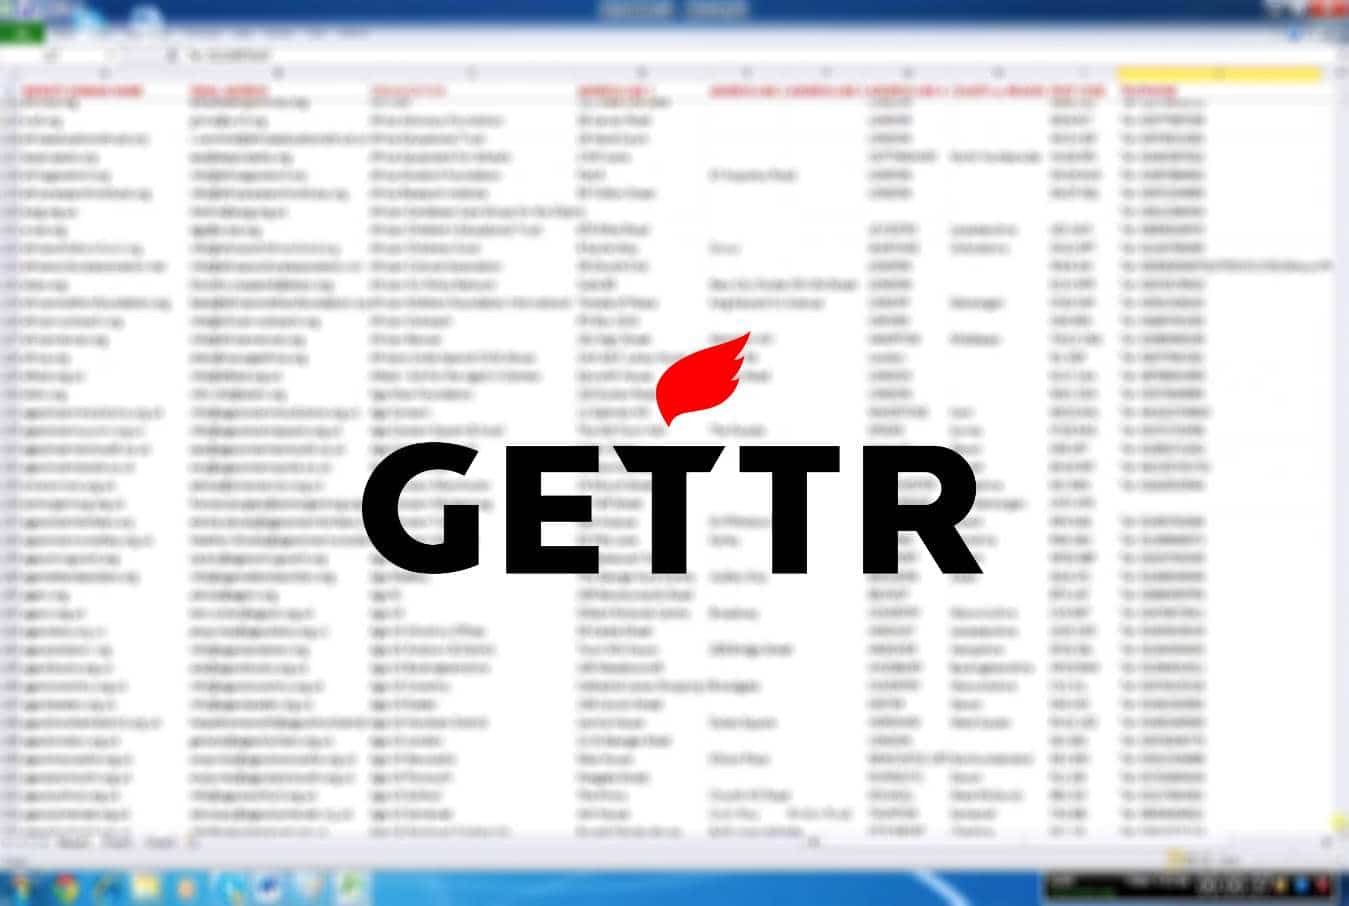 Hackers leak scraped data of 87,000 GETTR users